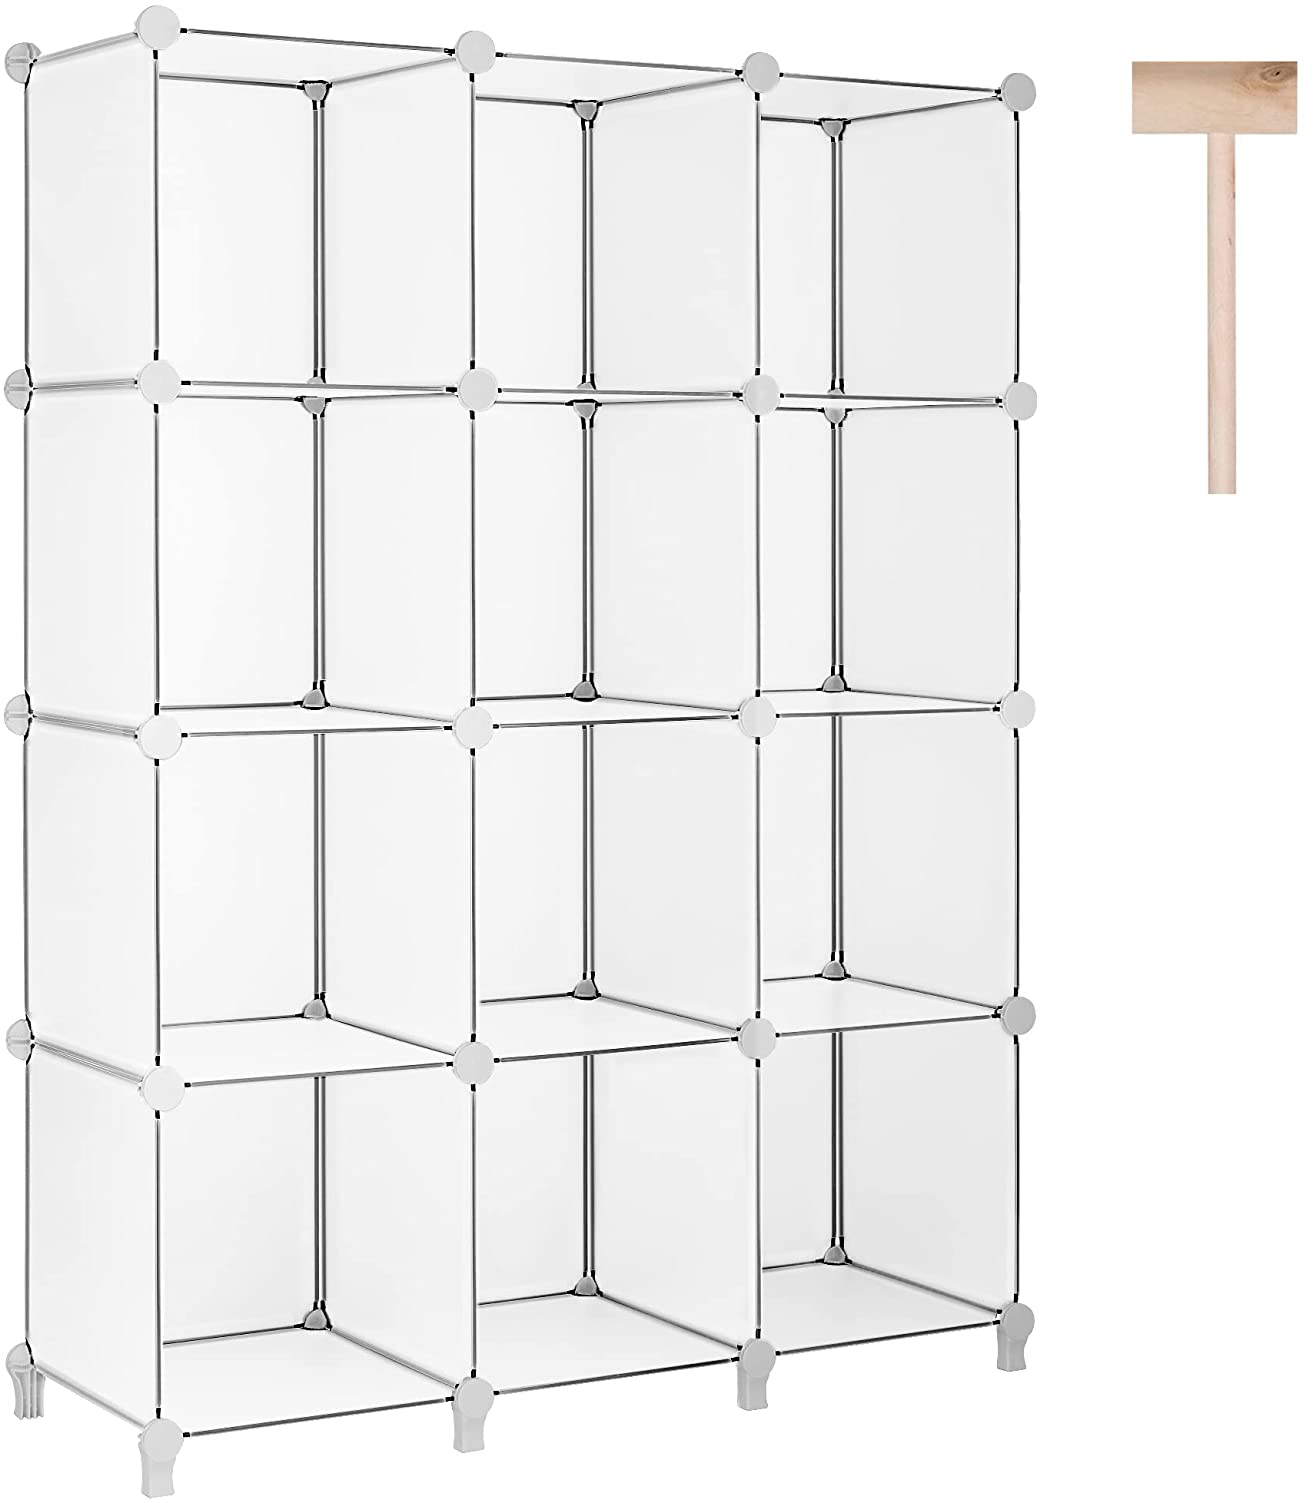 Puroma Cube Storage Organizer 12-Cube Closet Storage Shelves for $36.74